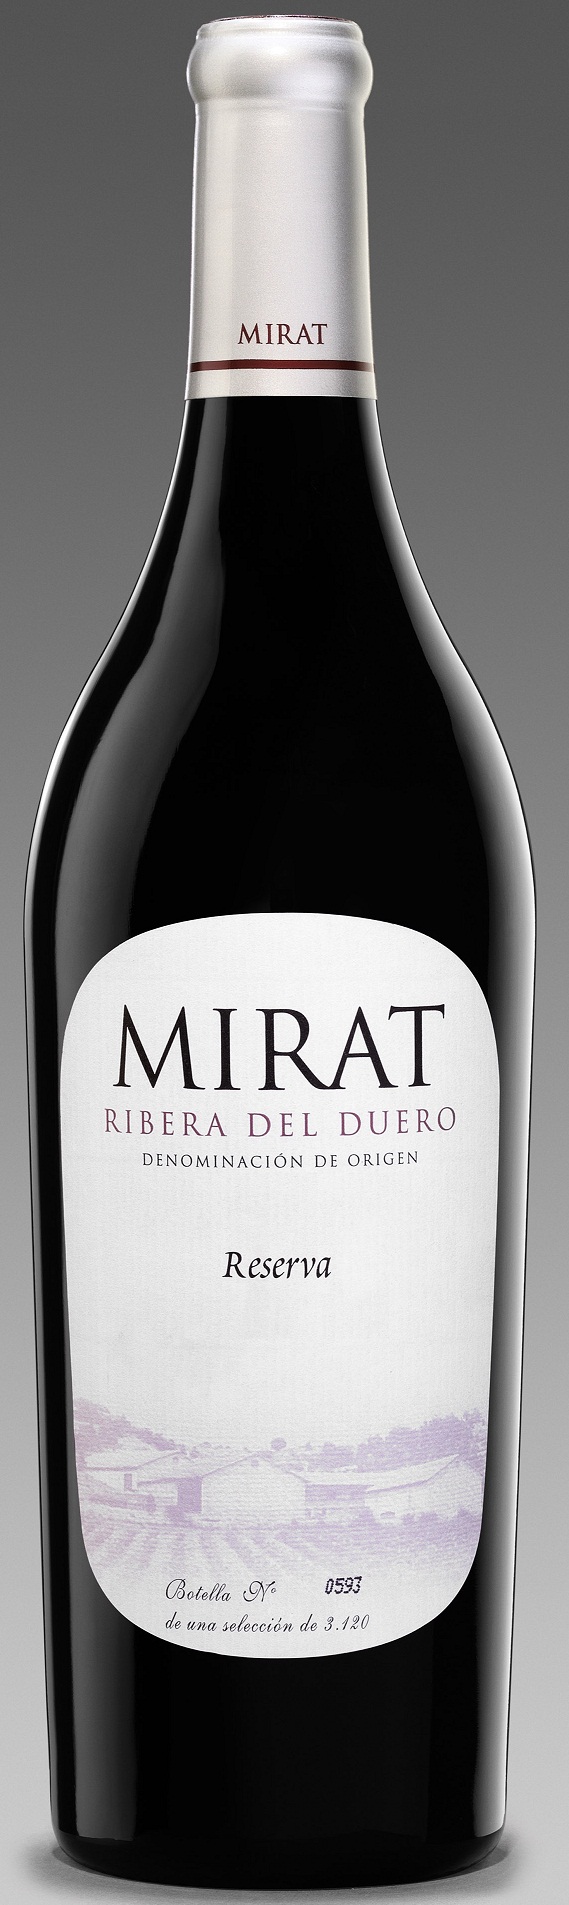 Logo del vino Mirat 2004 Reserva